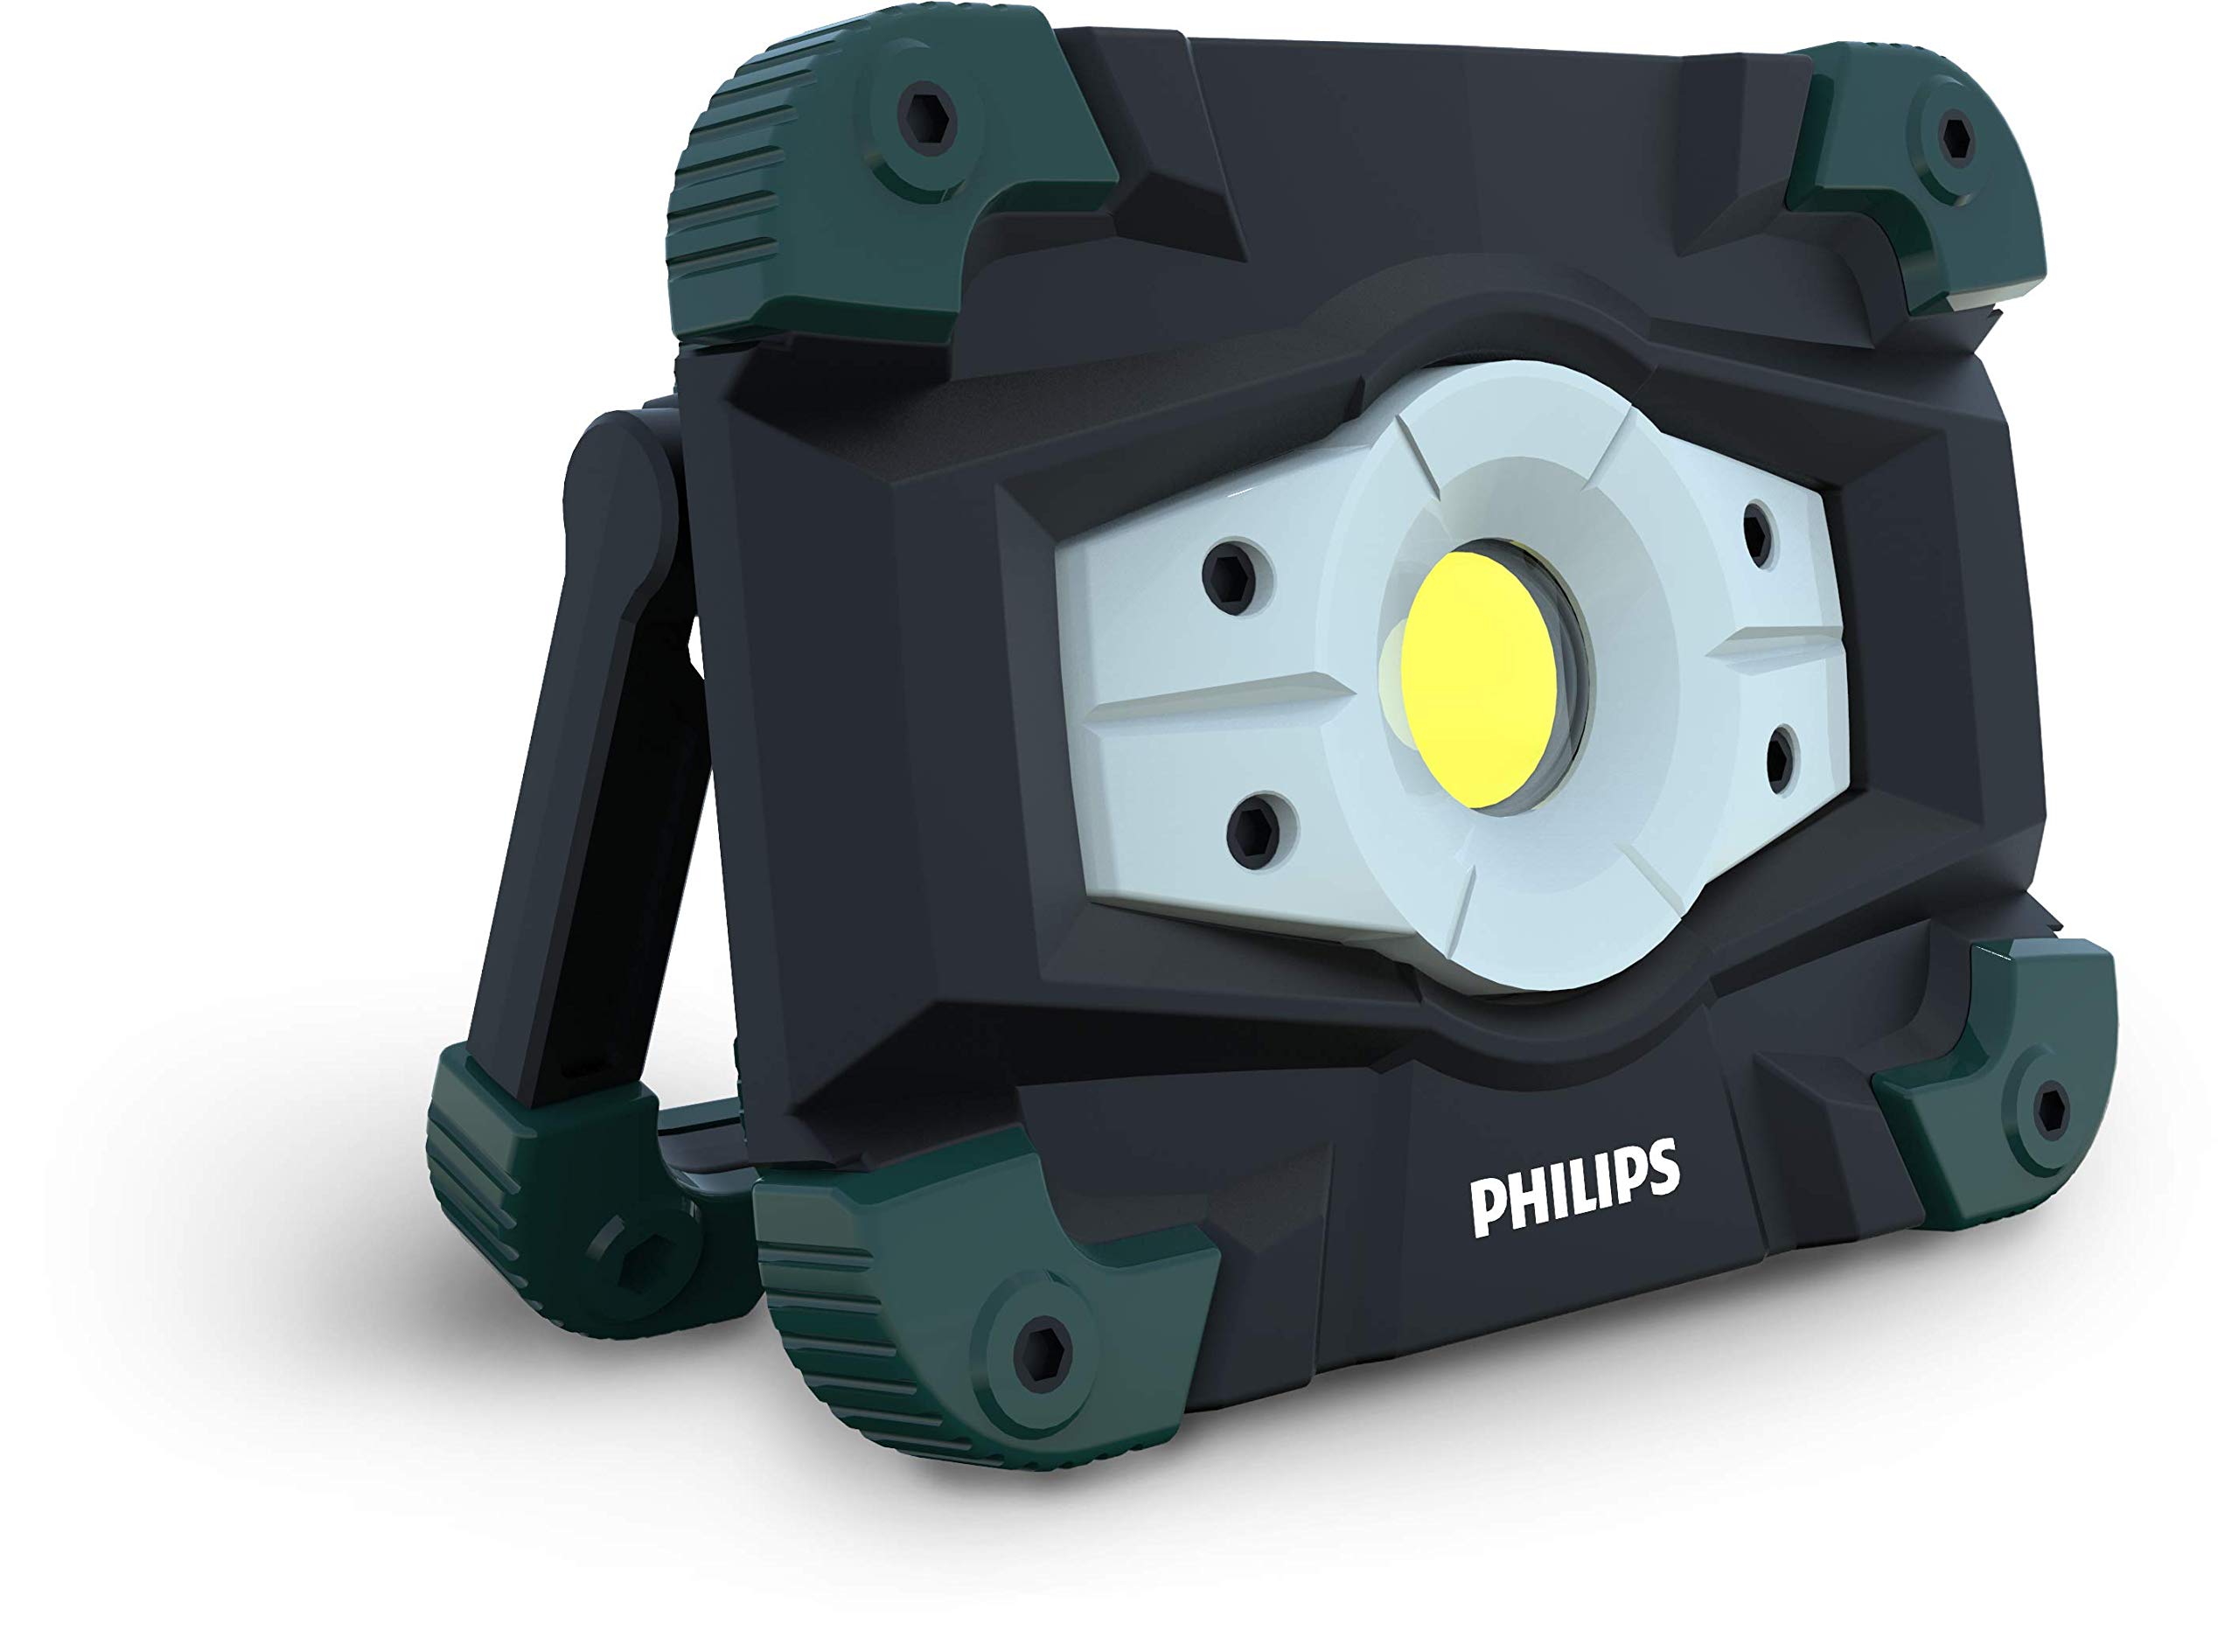 Philips EcoPro50 LED-Arbeitsleuchte, tragbarer wiederaufladbarer LED-Strahler aus Aluminium, Baustrahler, 1000lm, Powerbank Funktion